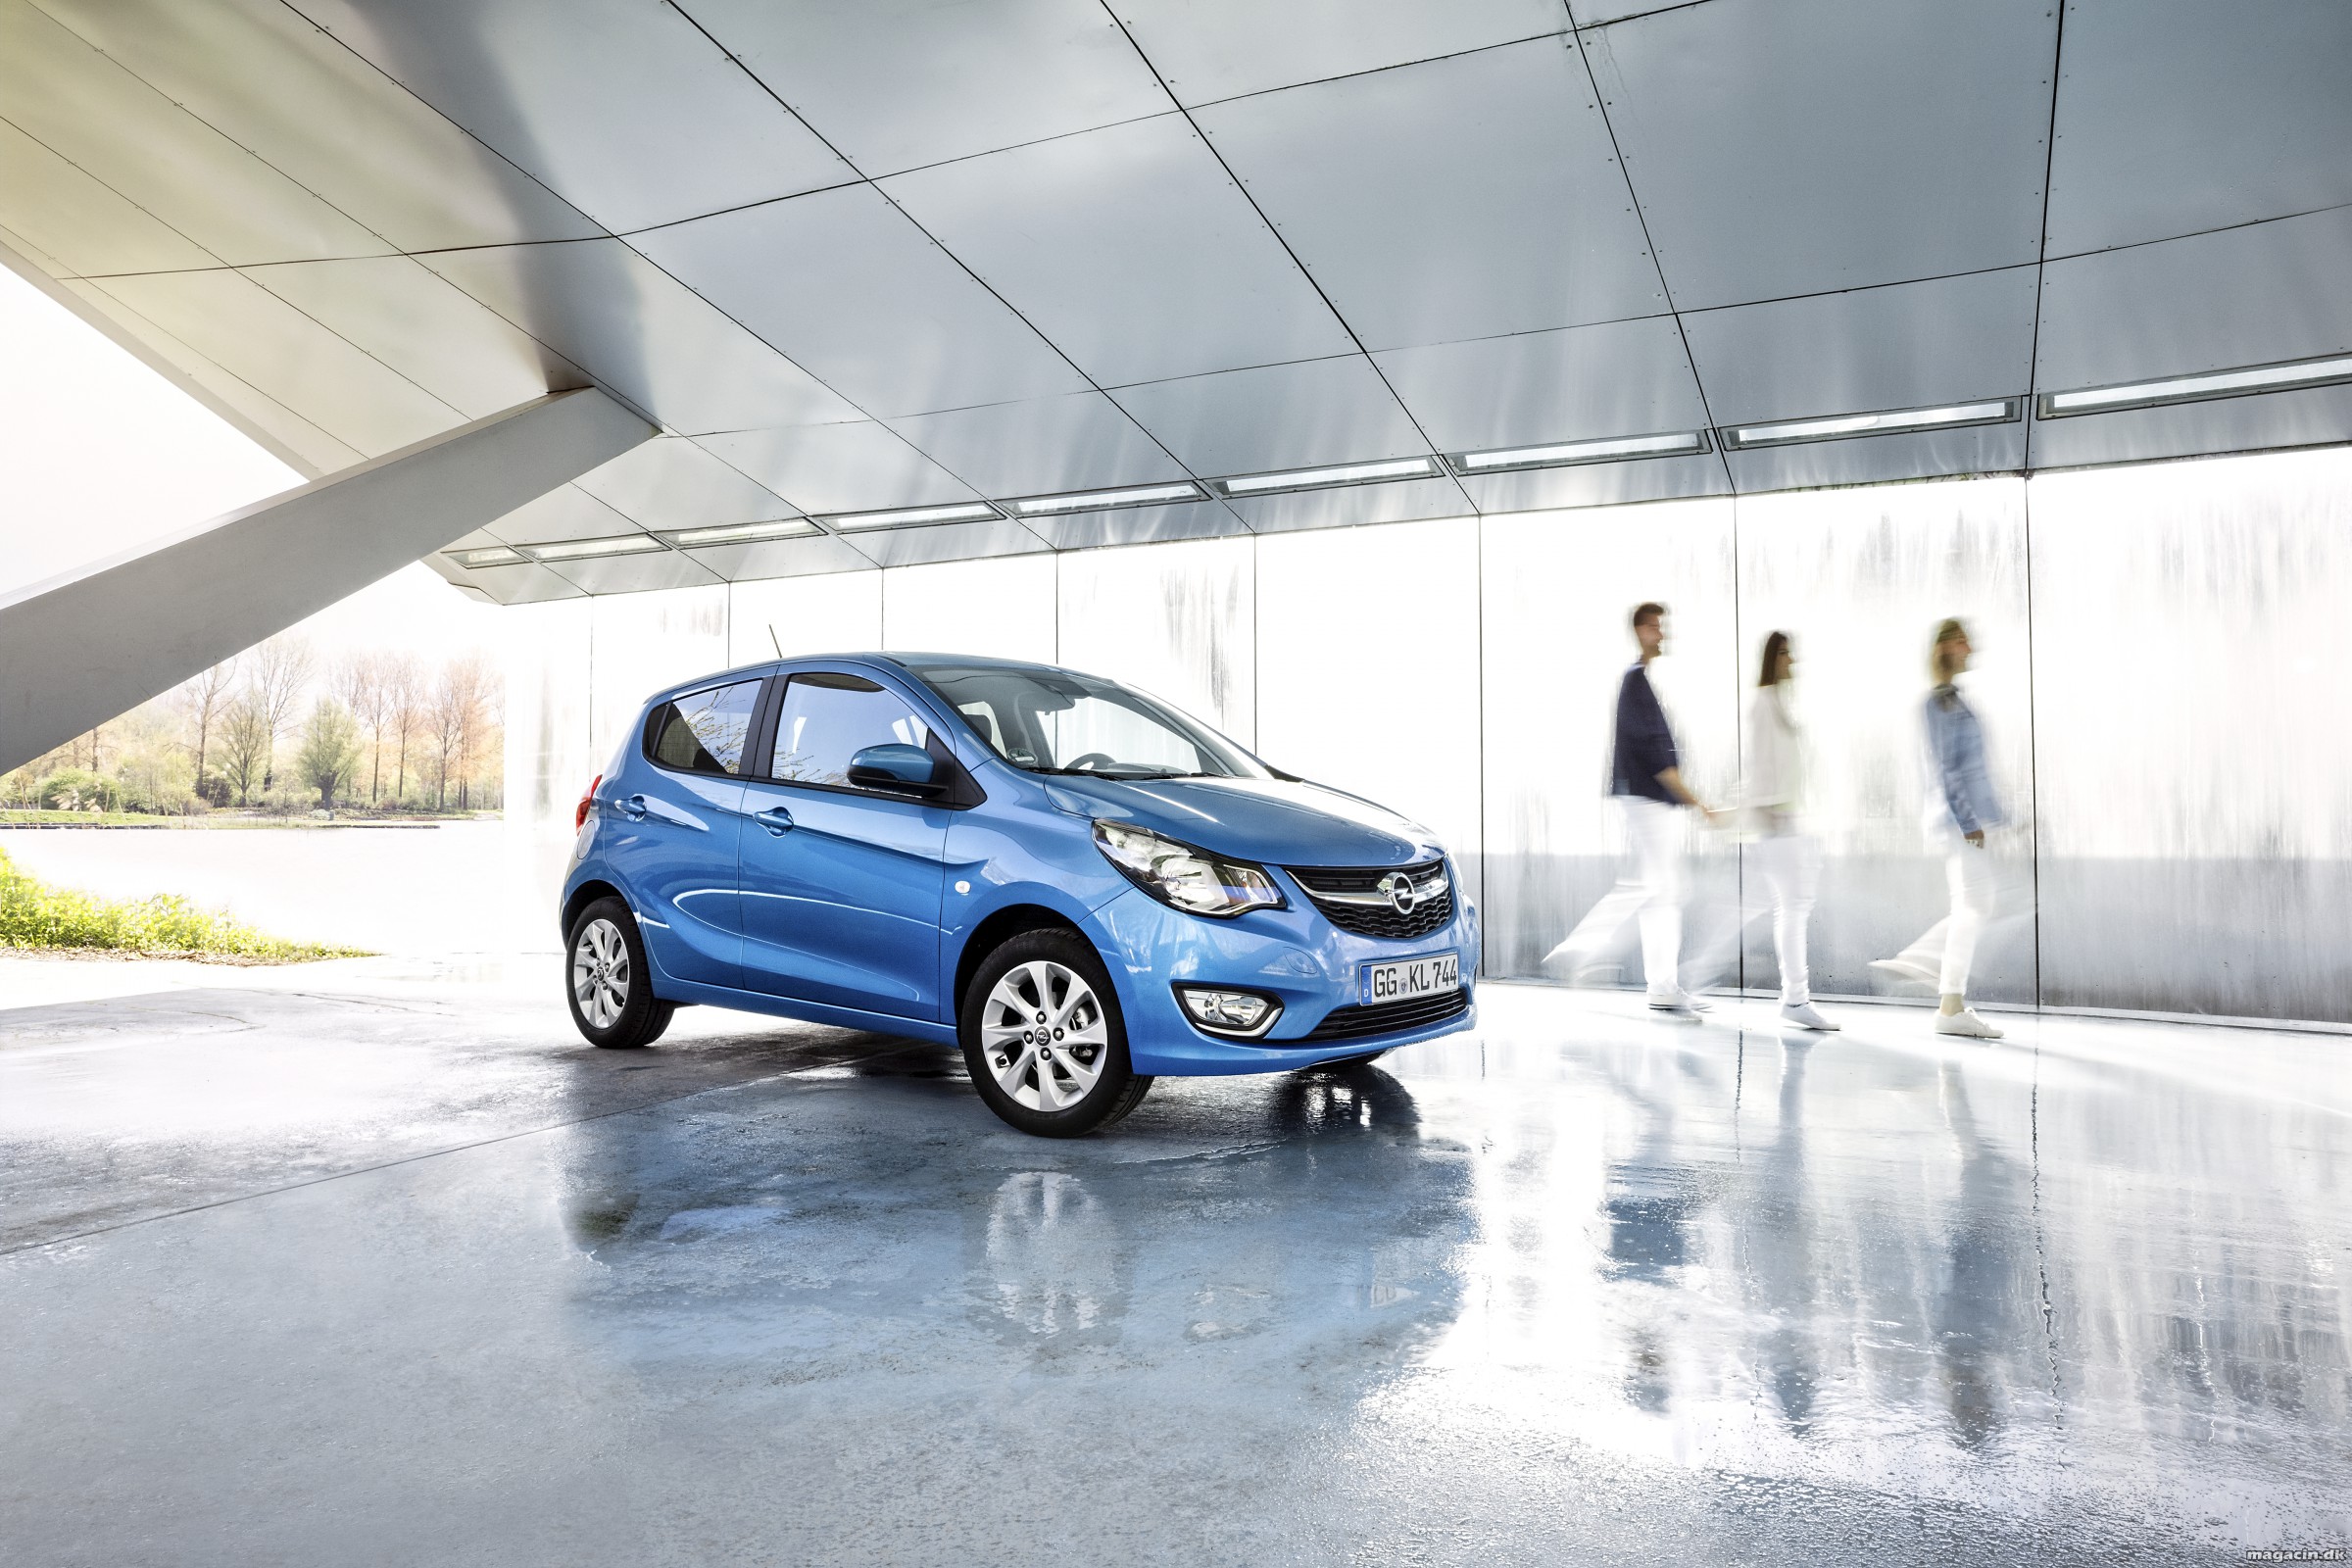 Minitest: Opel ejer fremtiden i mikroklassen